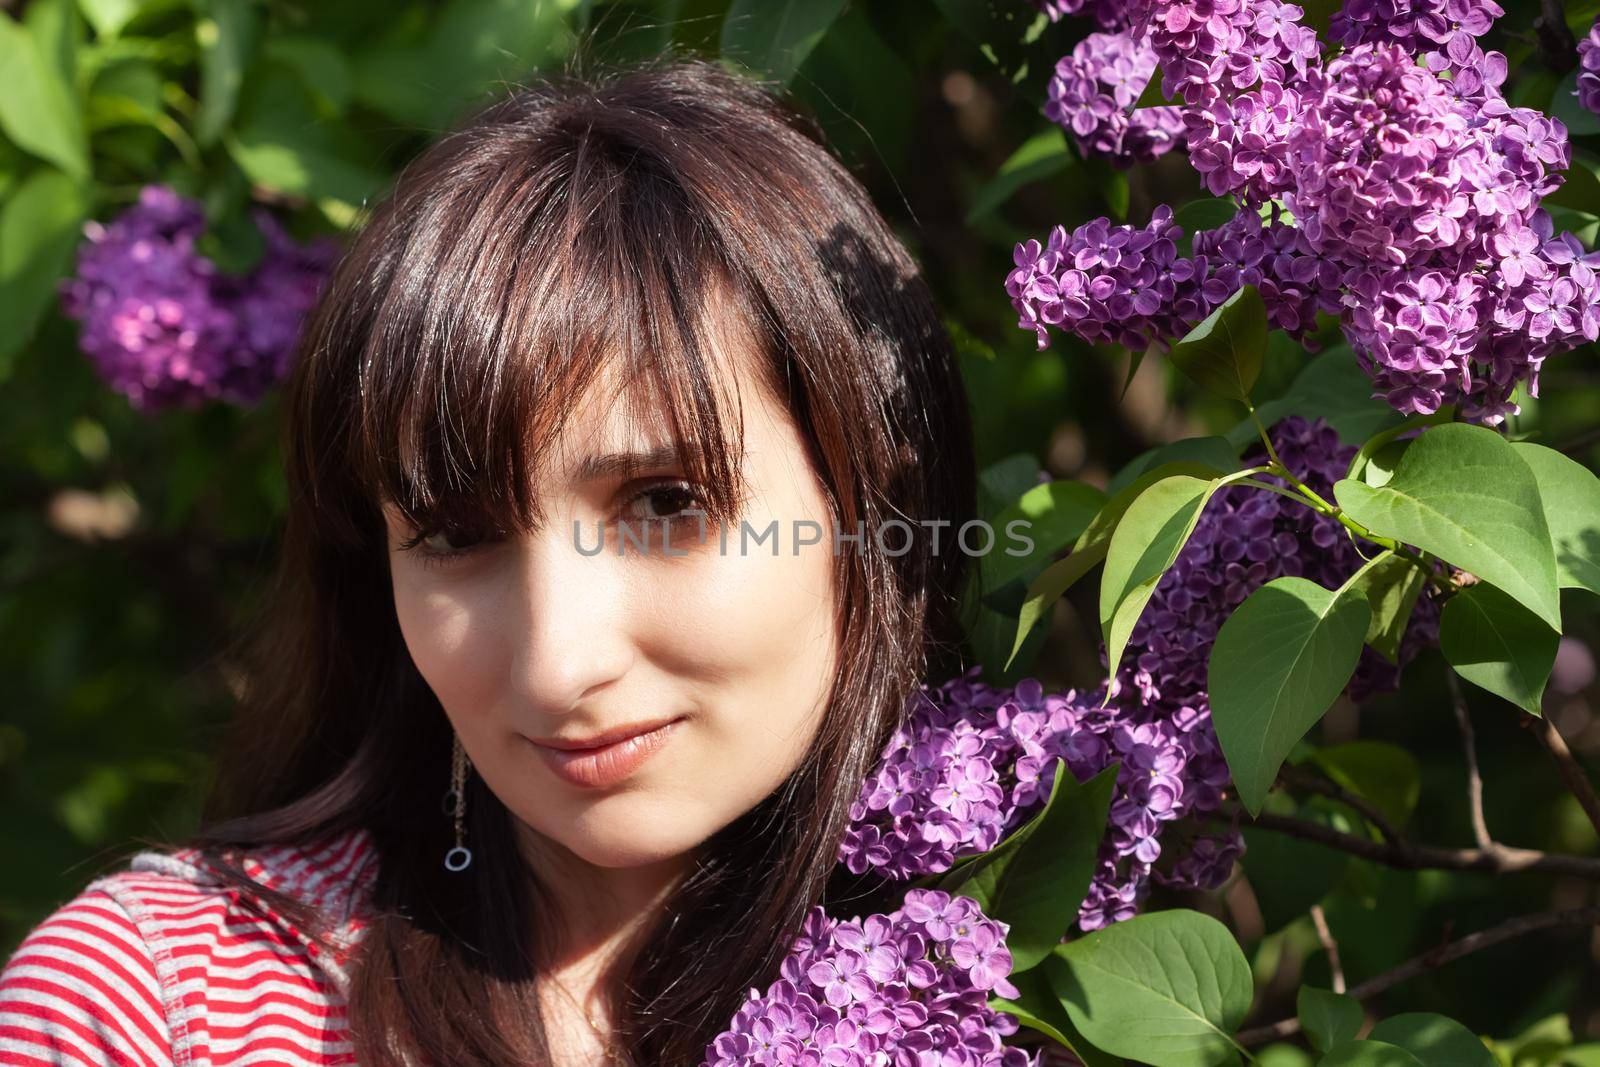 woman posing among blooming lilacs by palinchak